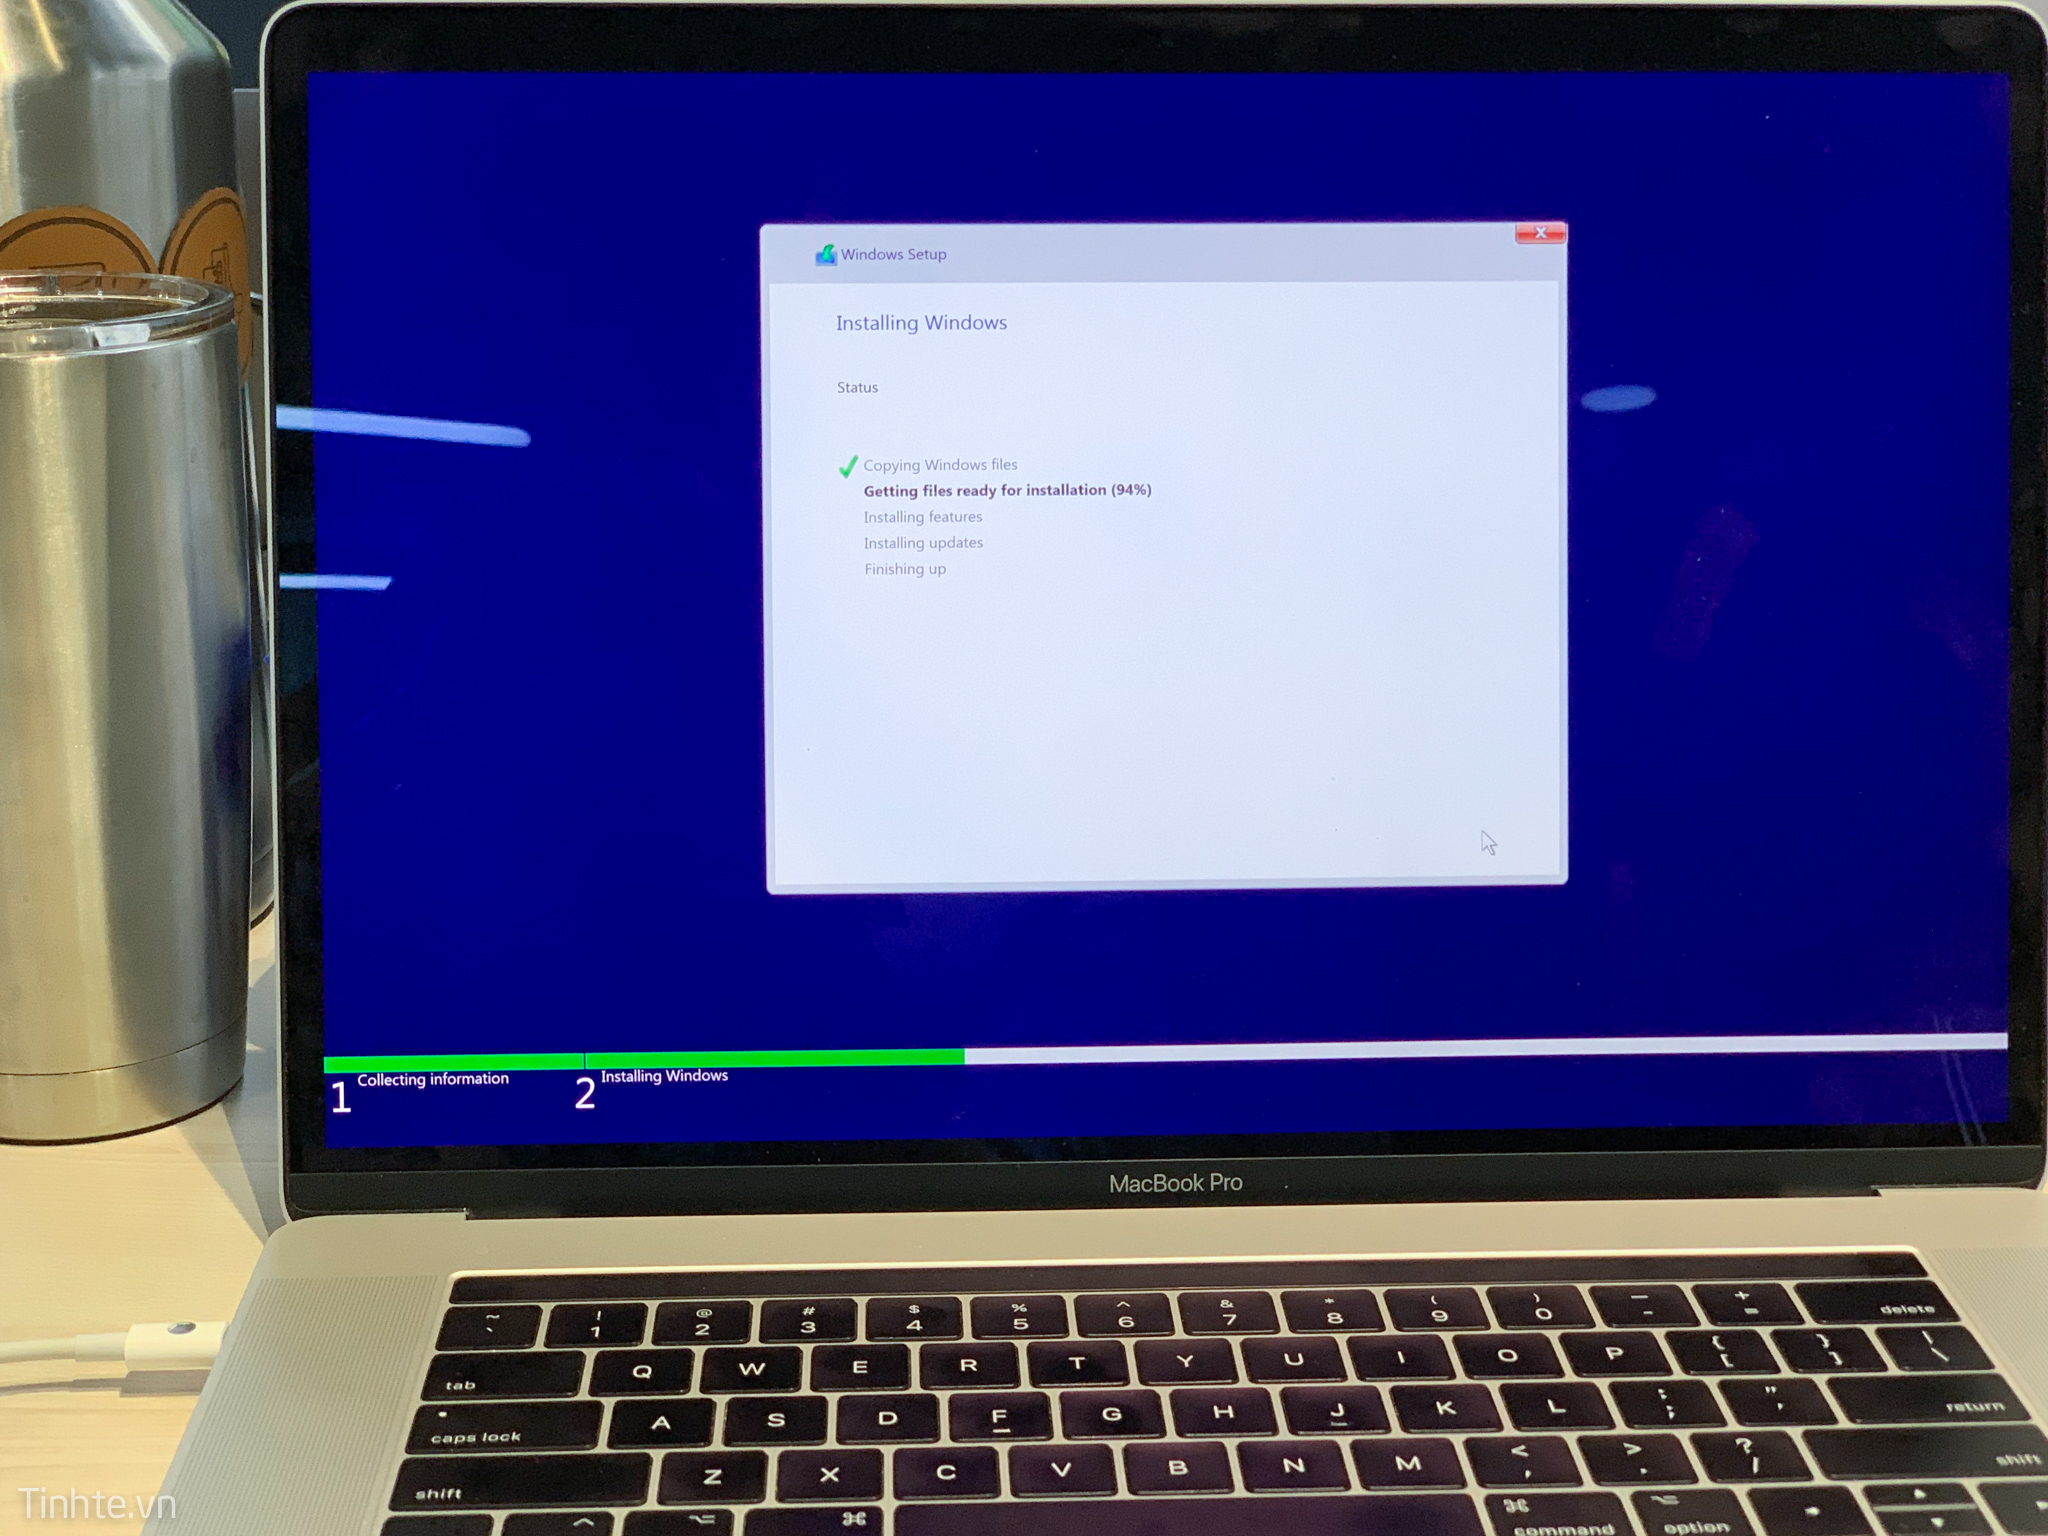 macbook m1 windows 10 bootcamp